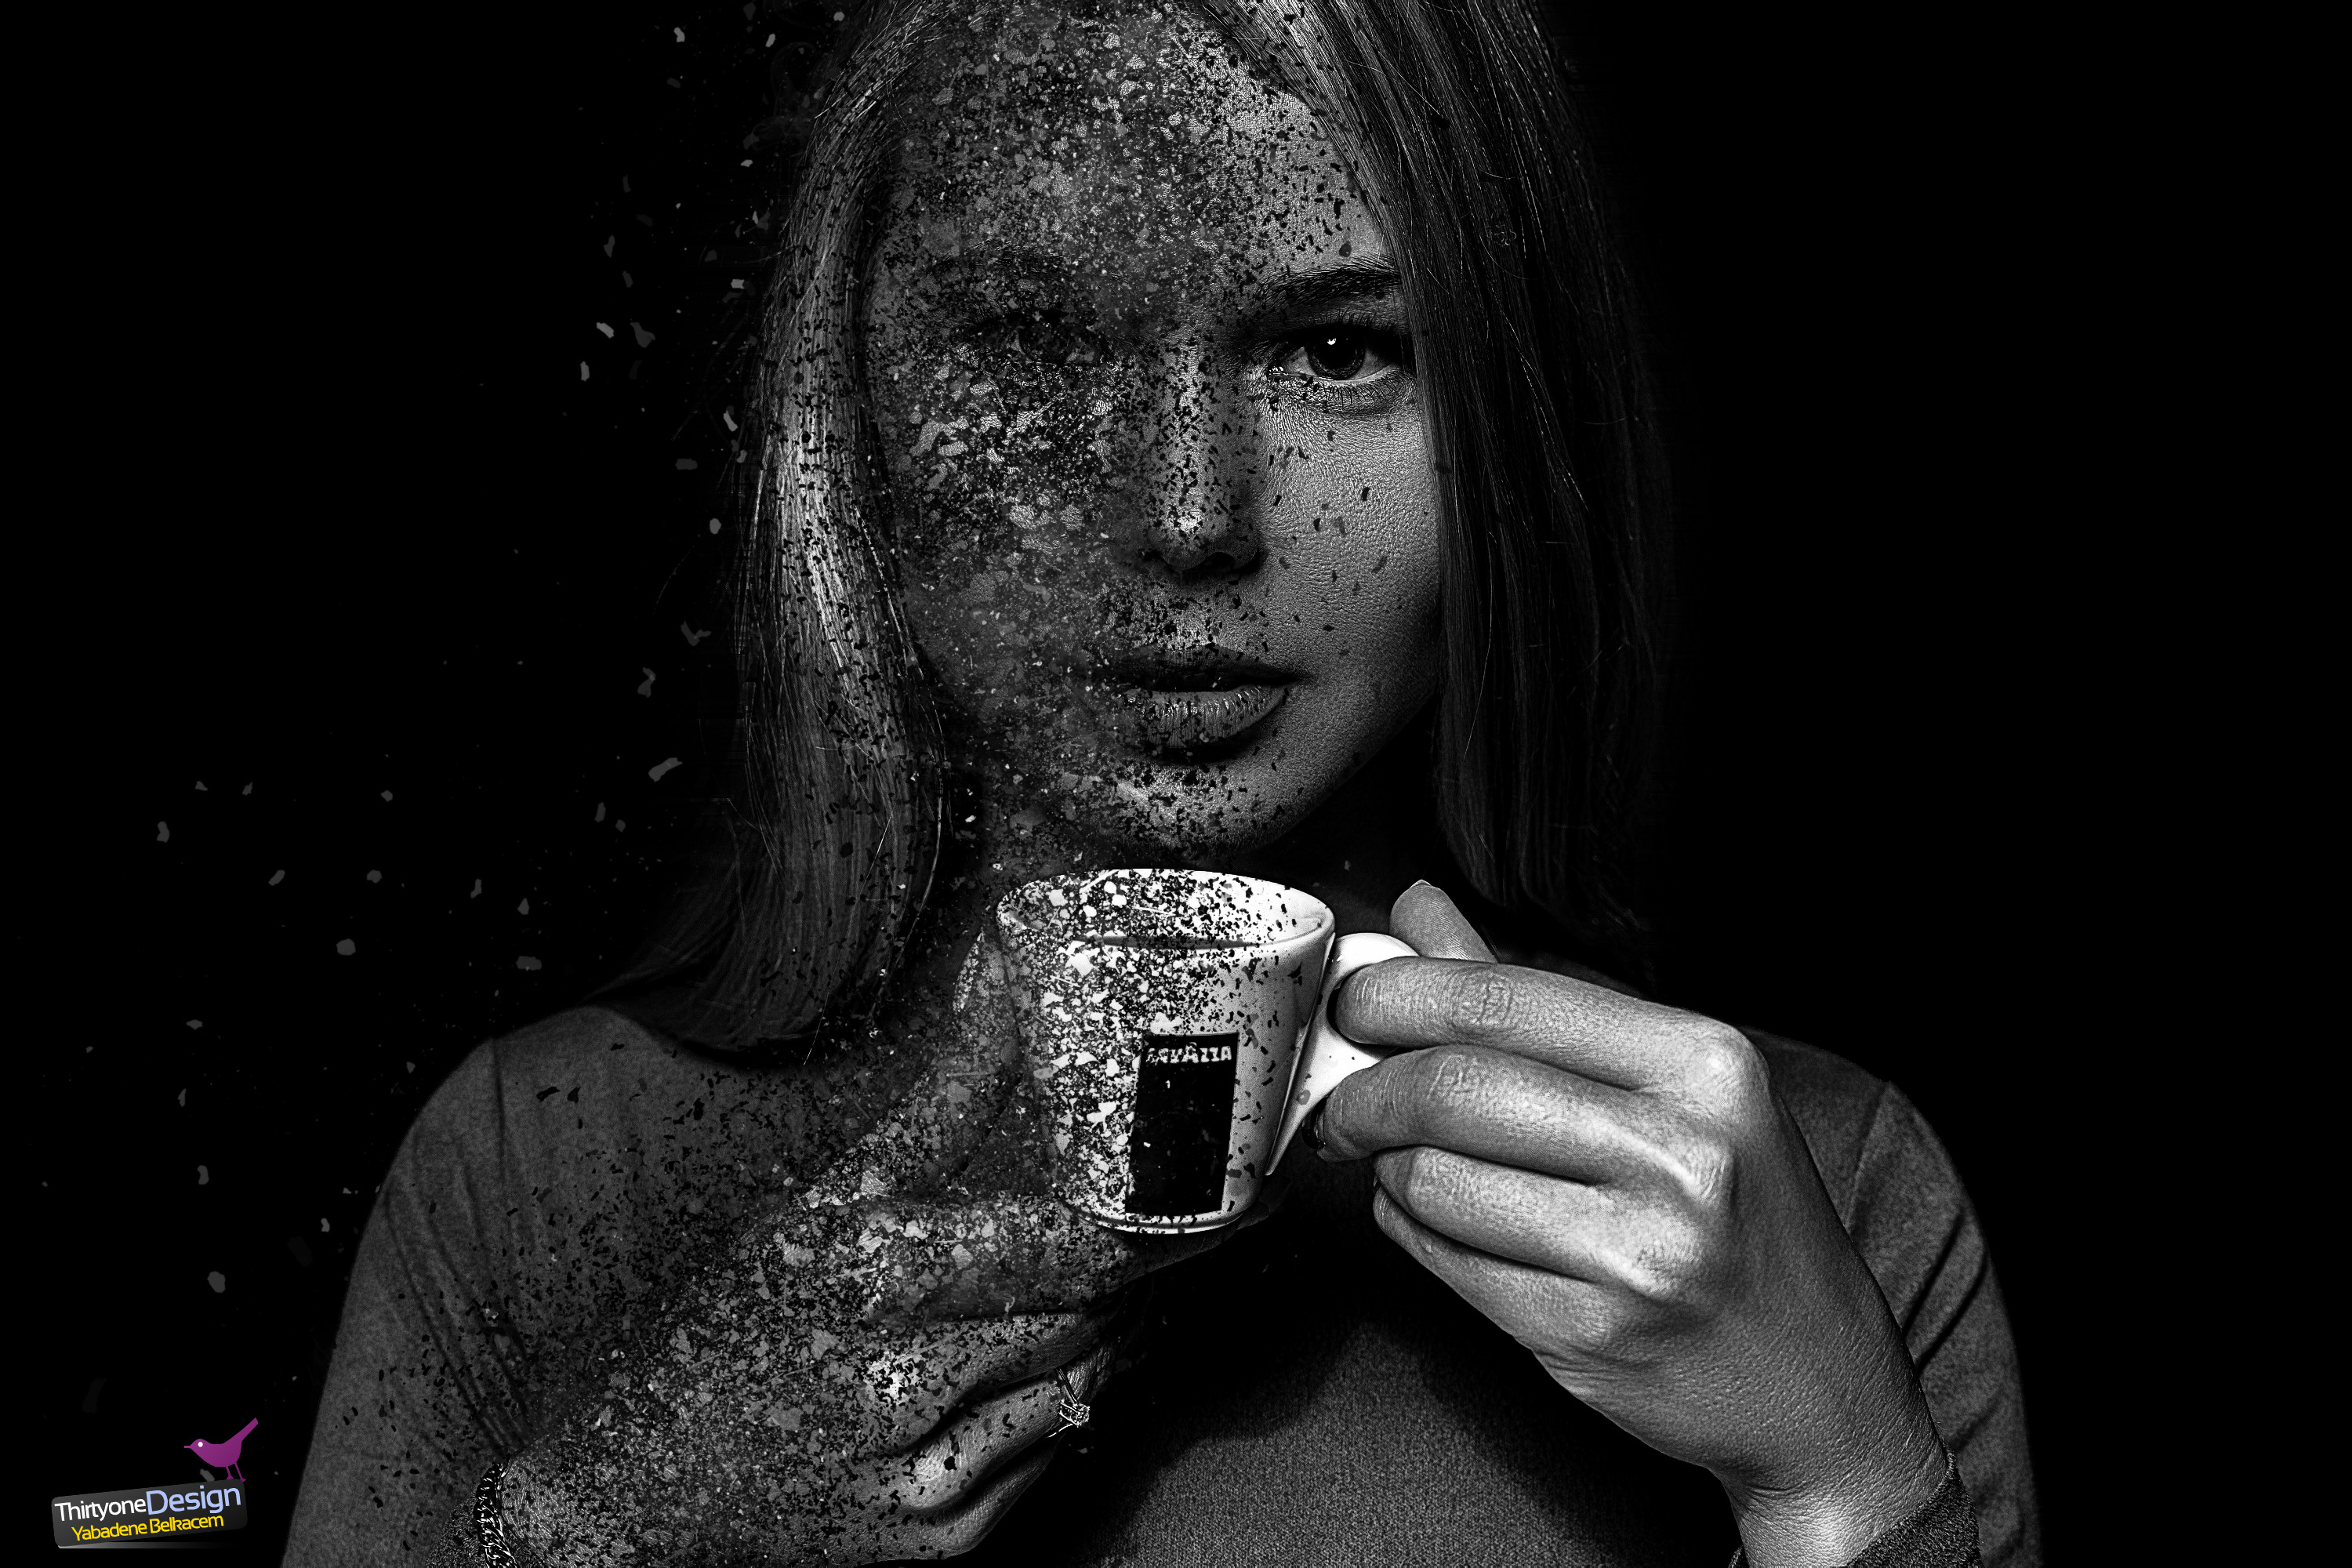 General 3000x2000 women photoshopped dispersion monochrome digital art simple background watermarked